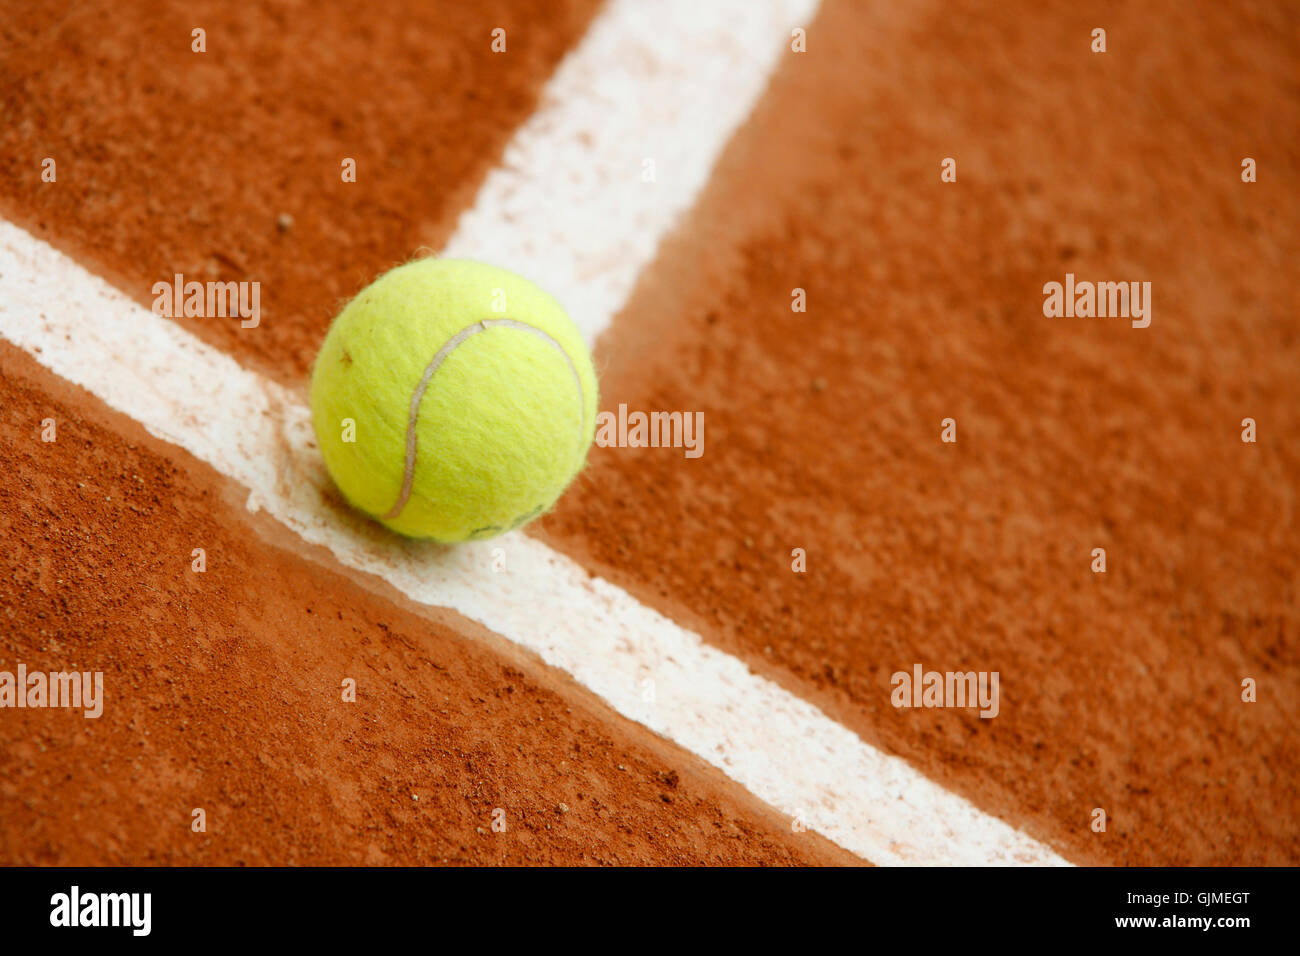 sport tennis sport Stock Photo